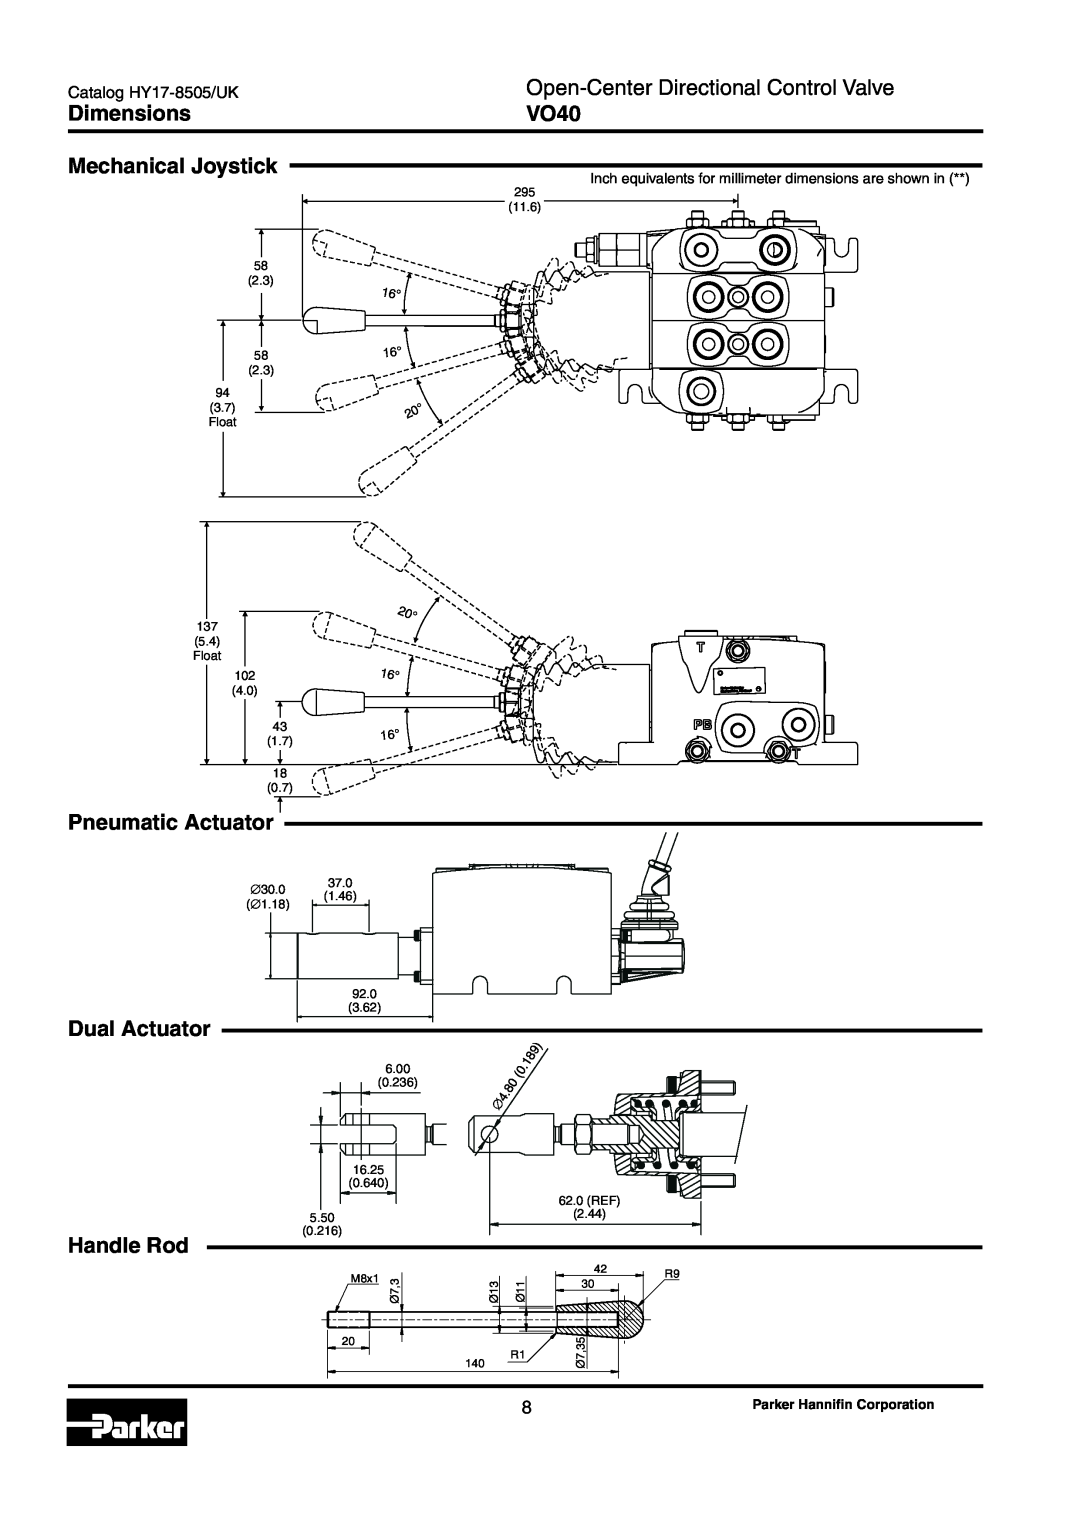 Parker Hannifin VO40 Dimensions Mechanical Joystick, Pneumatic Actuator, Dual Actuator, Handle Rod, Catalog HY17-8505/UK 